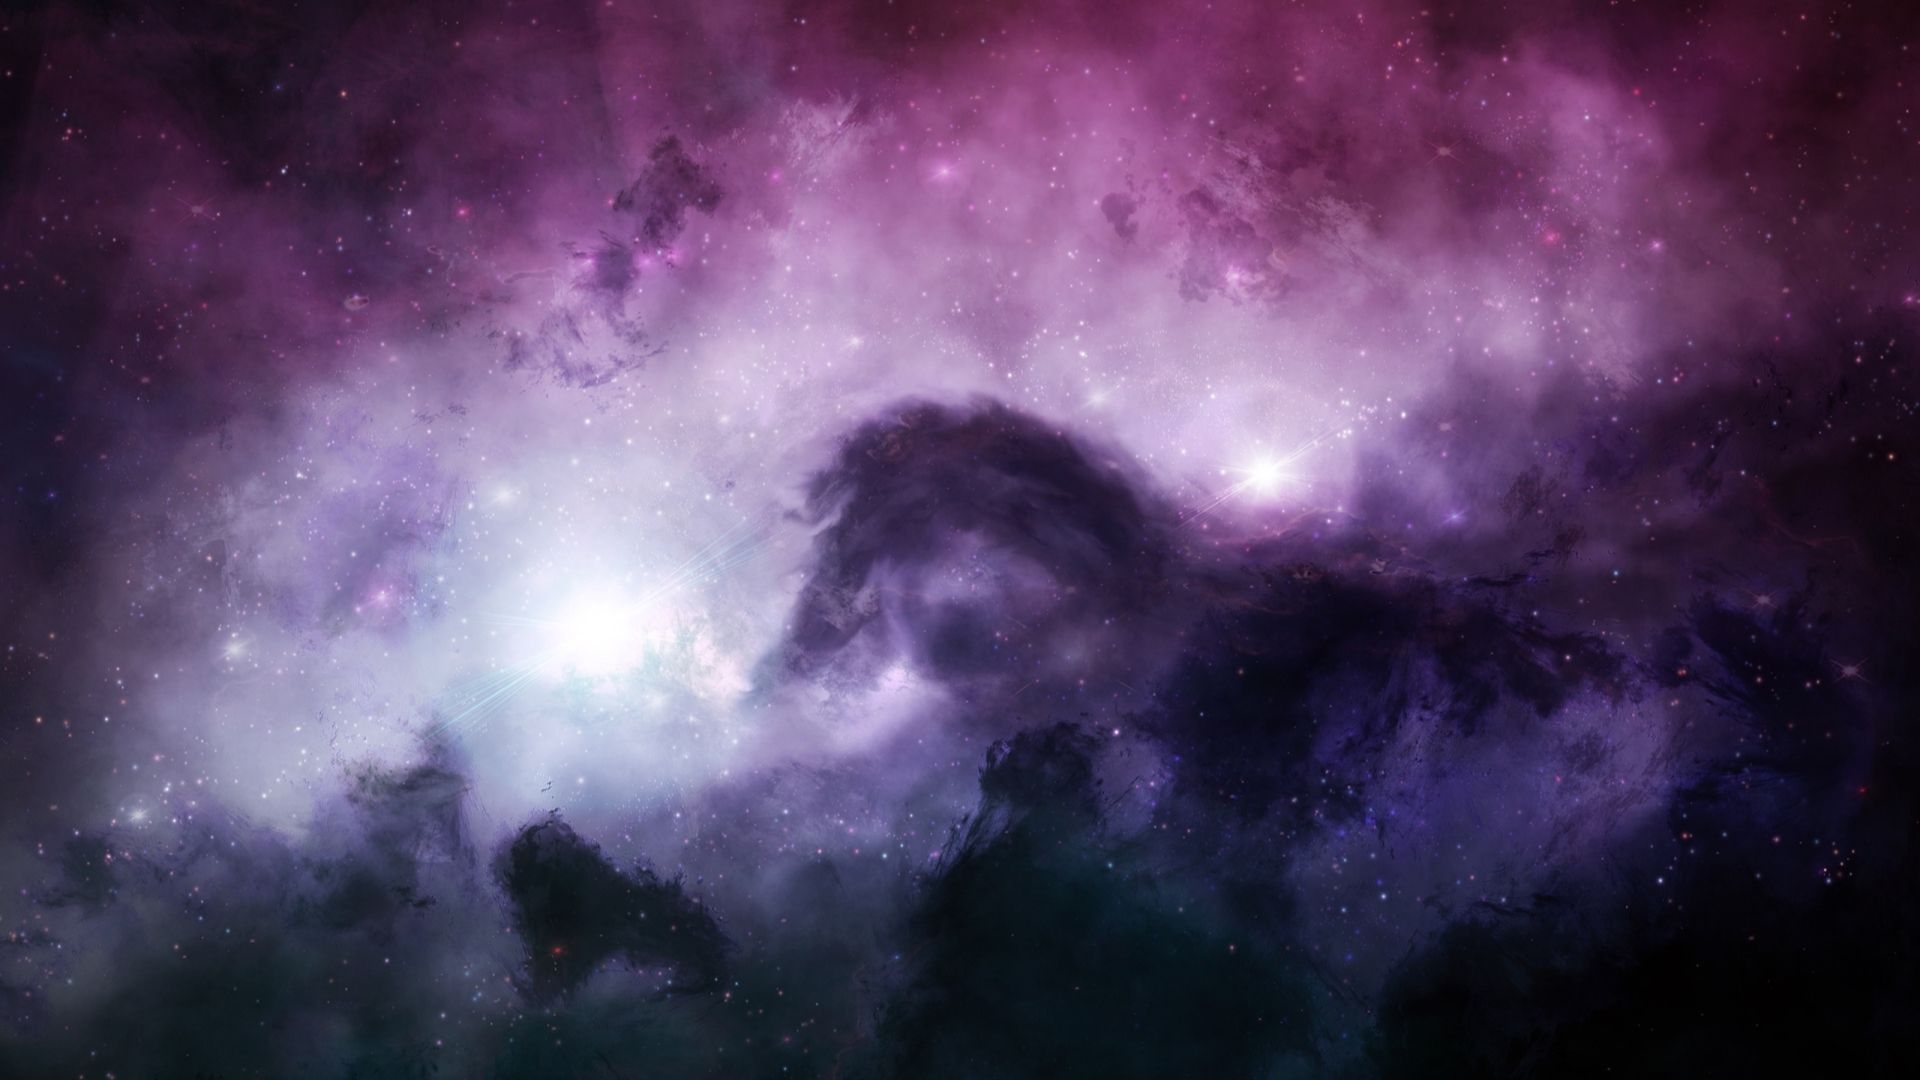 Illuminating The Dark Universe Mac Wallpaper Download | Free Mac ...